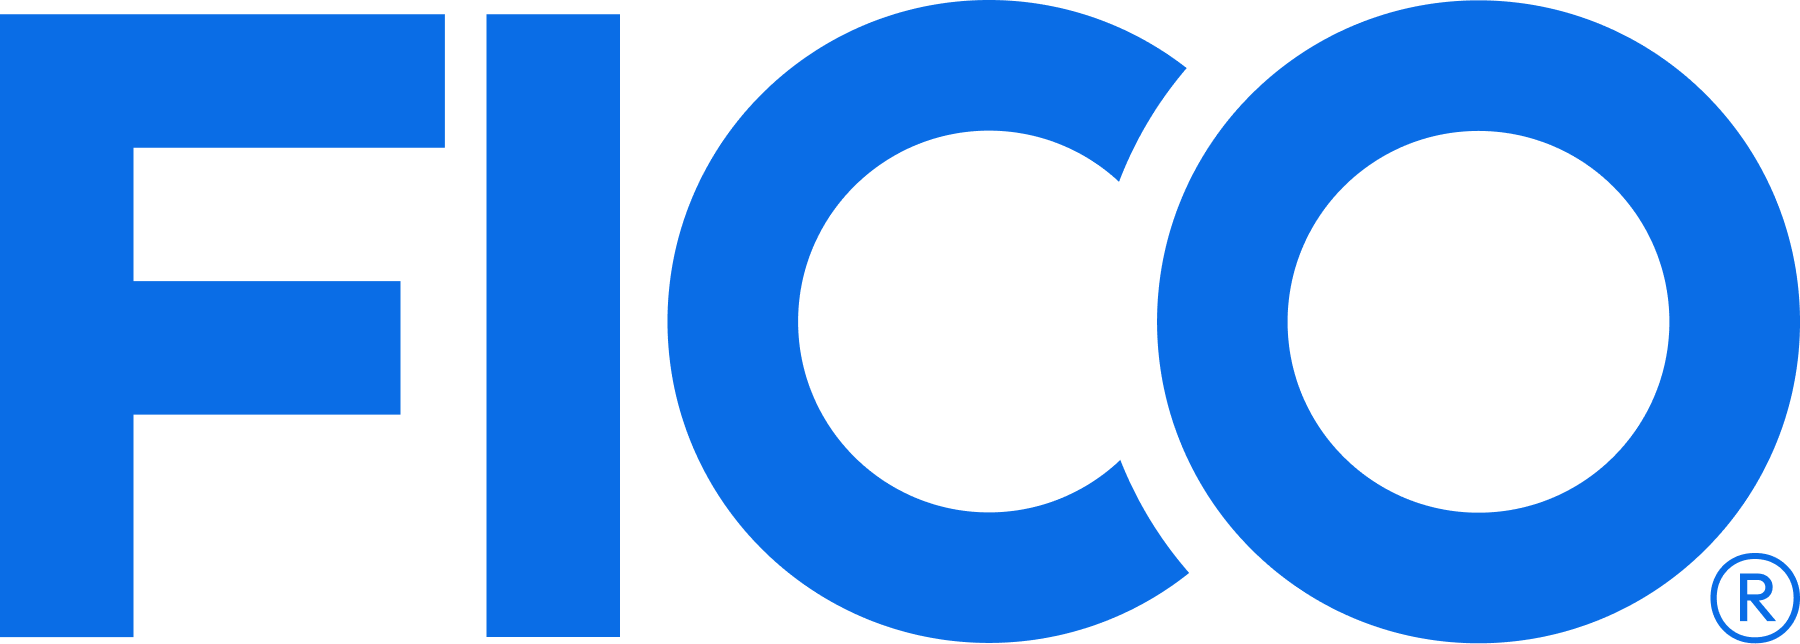 MyFICO Credit Reports logo